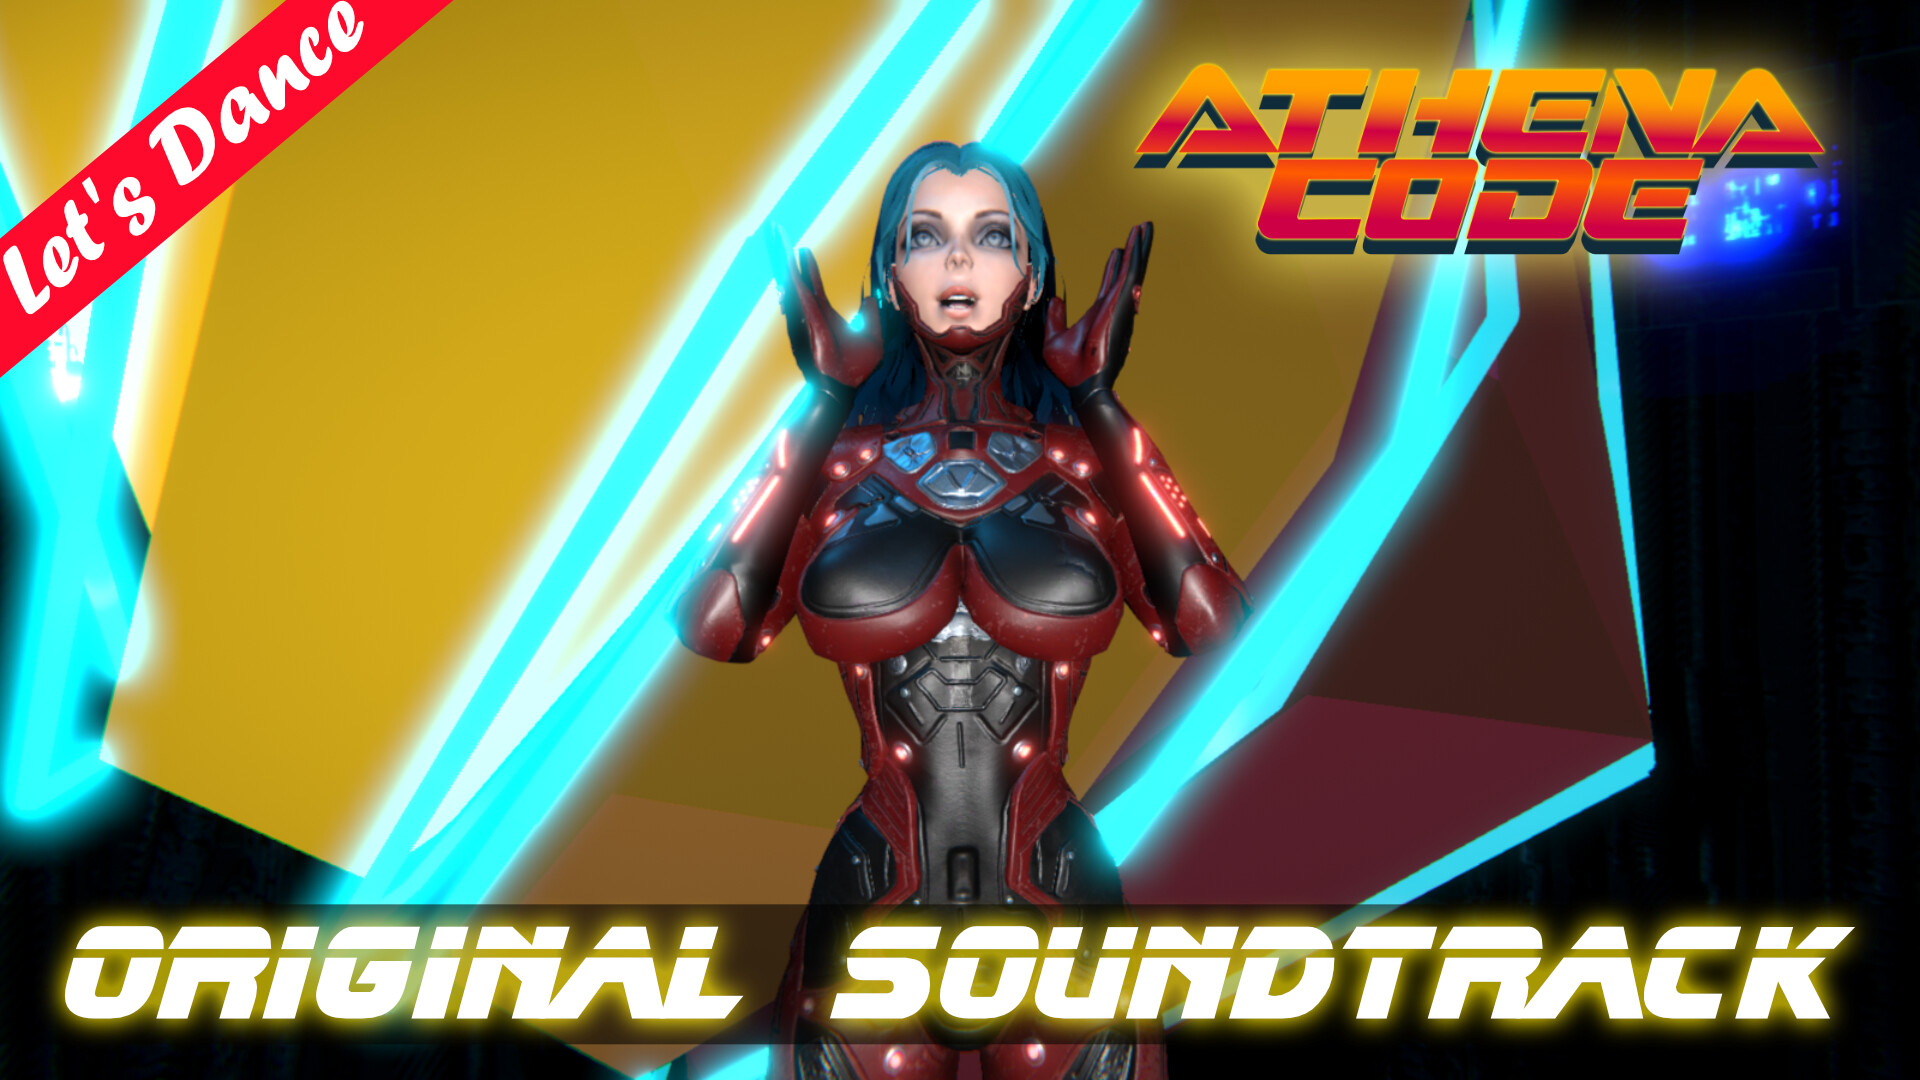 Athena Code Soundtrack Featured Screenshot #1